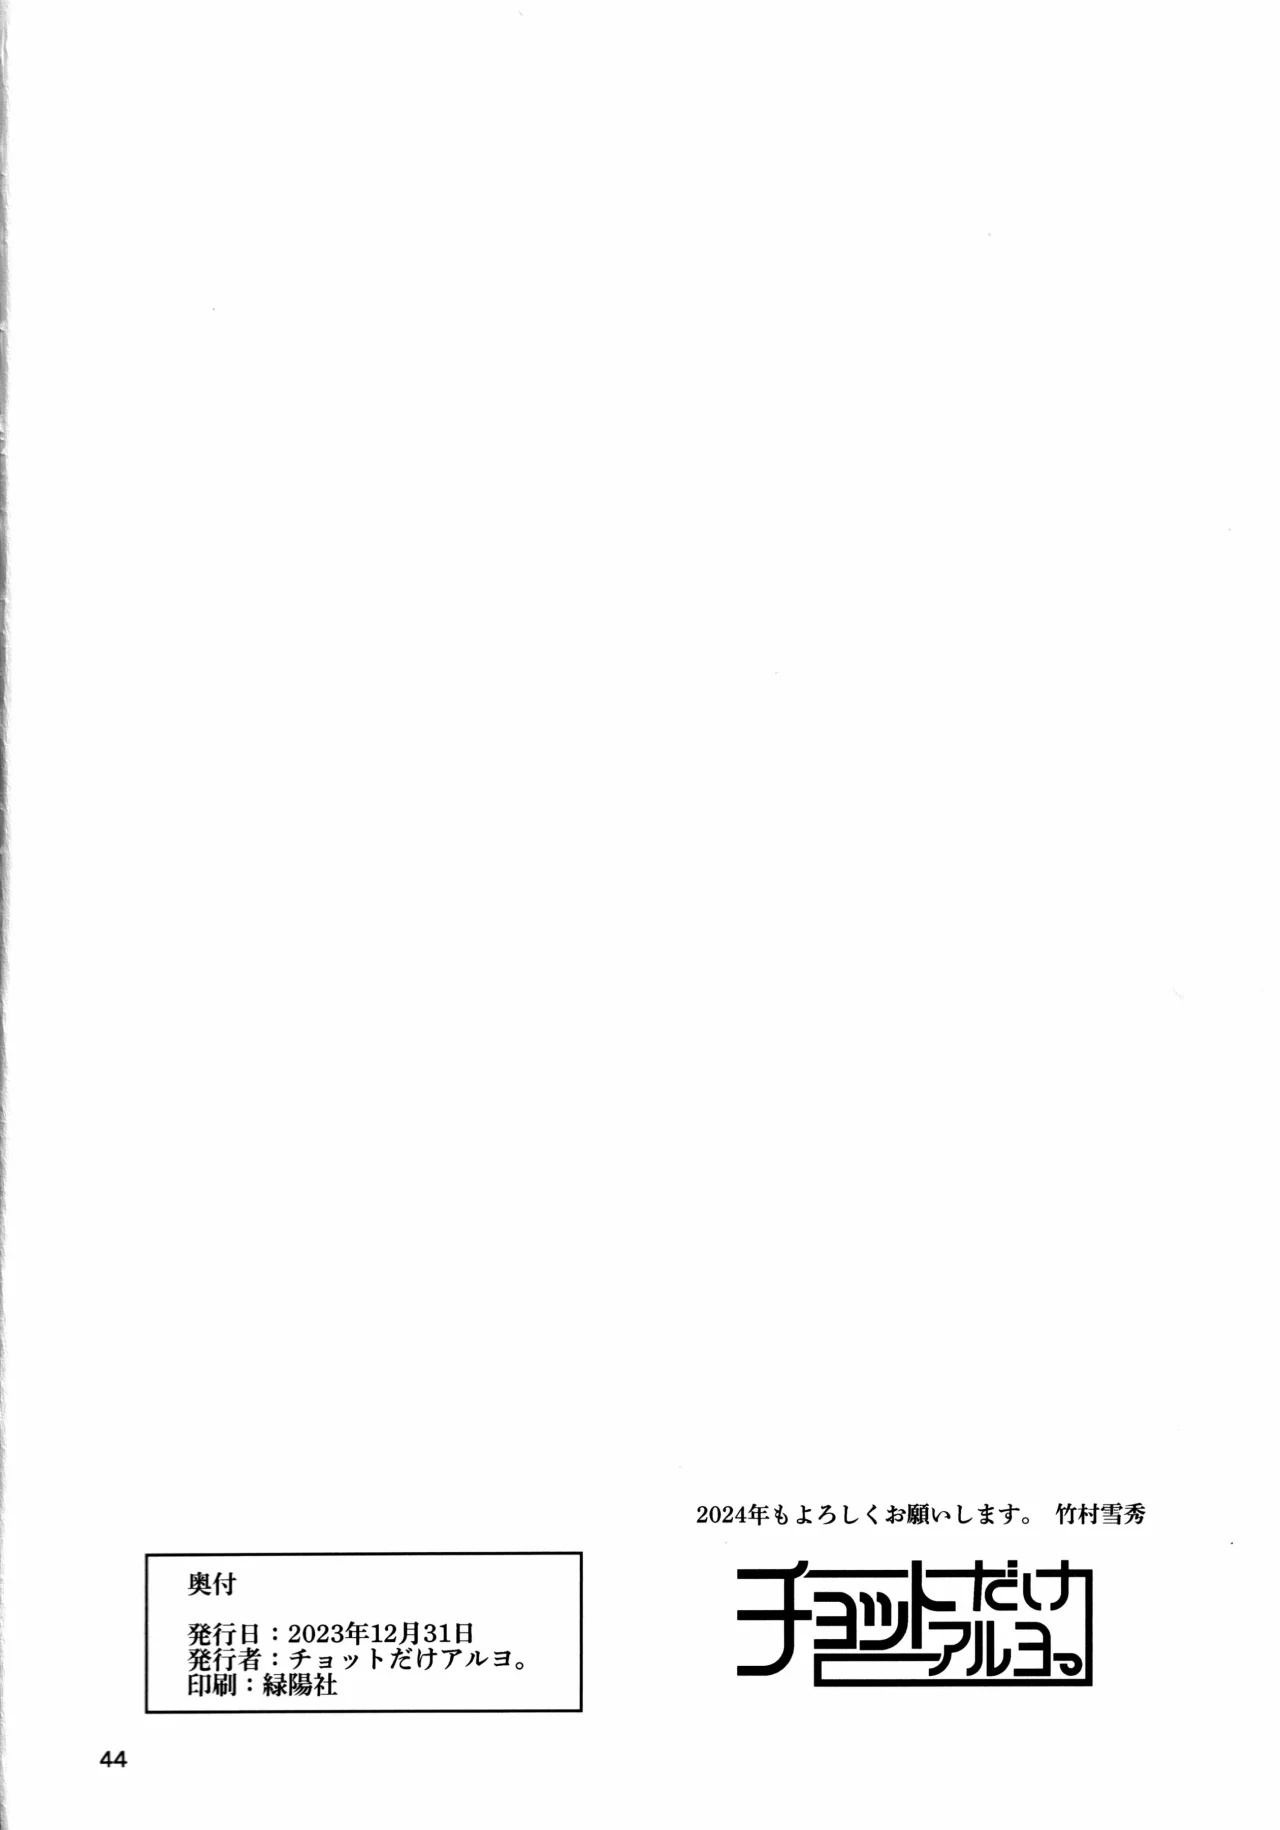 Okuyukashi Oominato Hen Modesty 2 &#91;Raw jap&#93; - 41